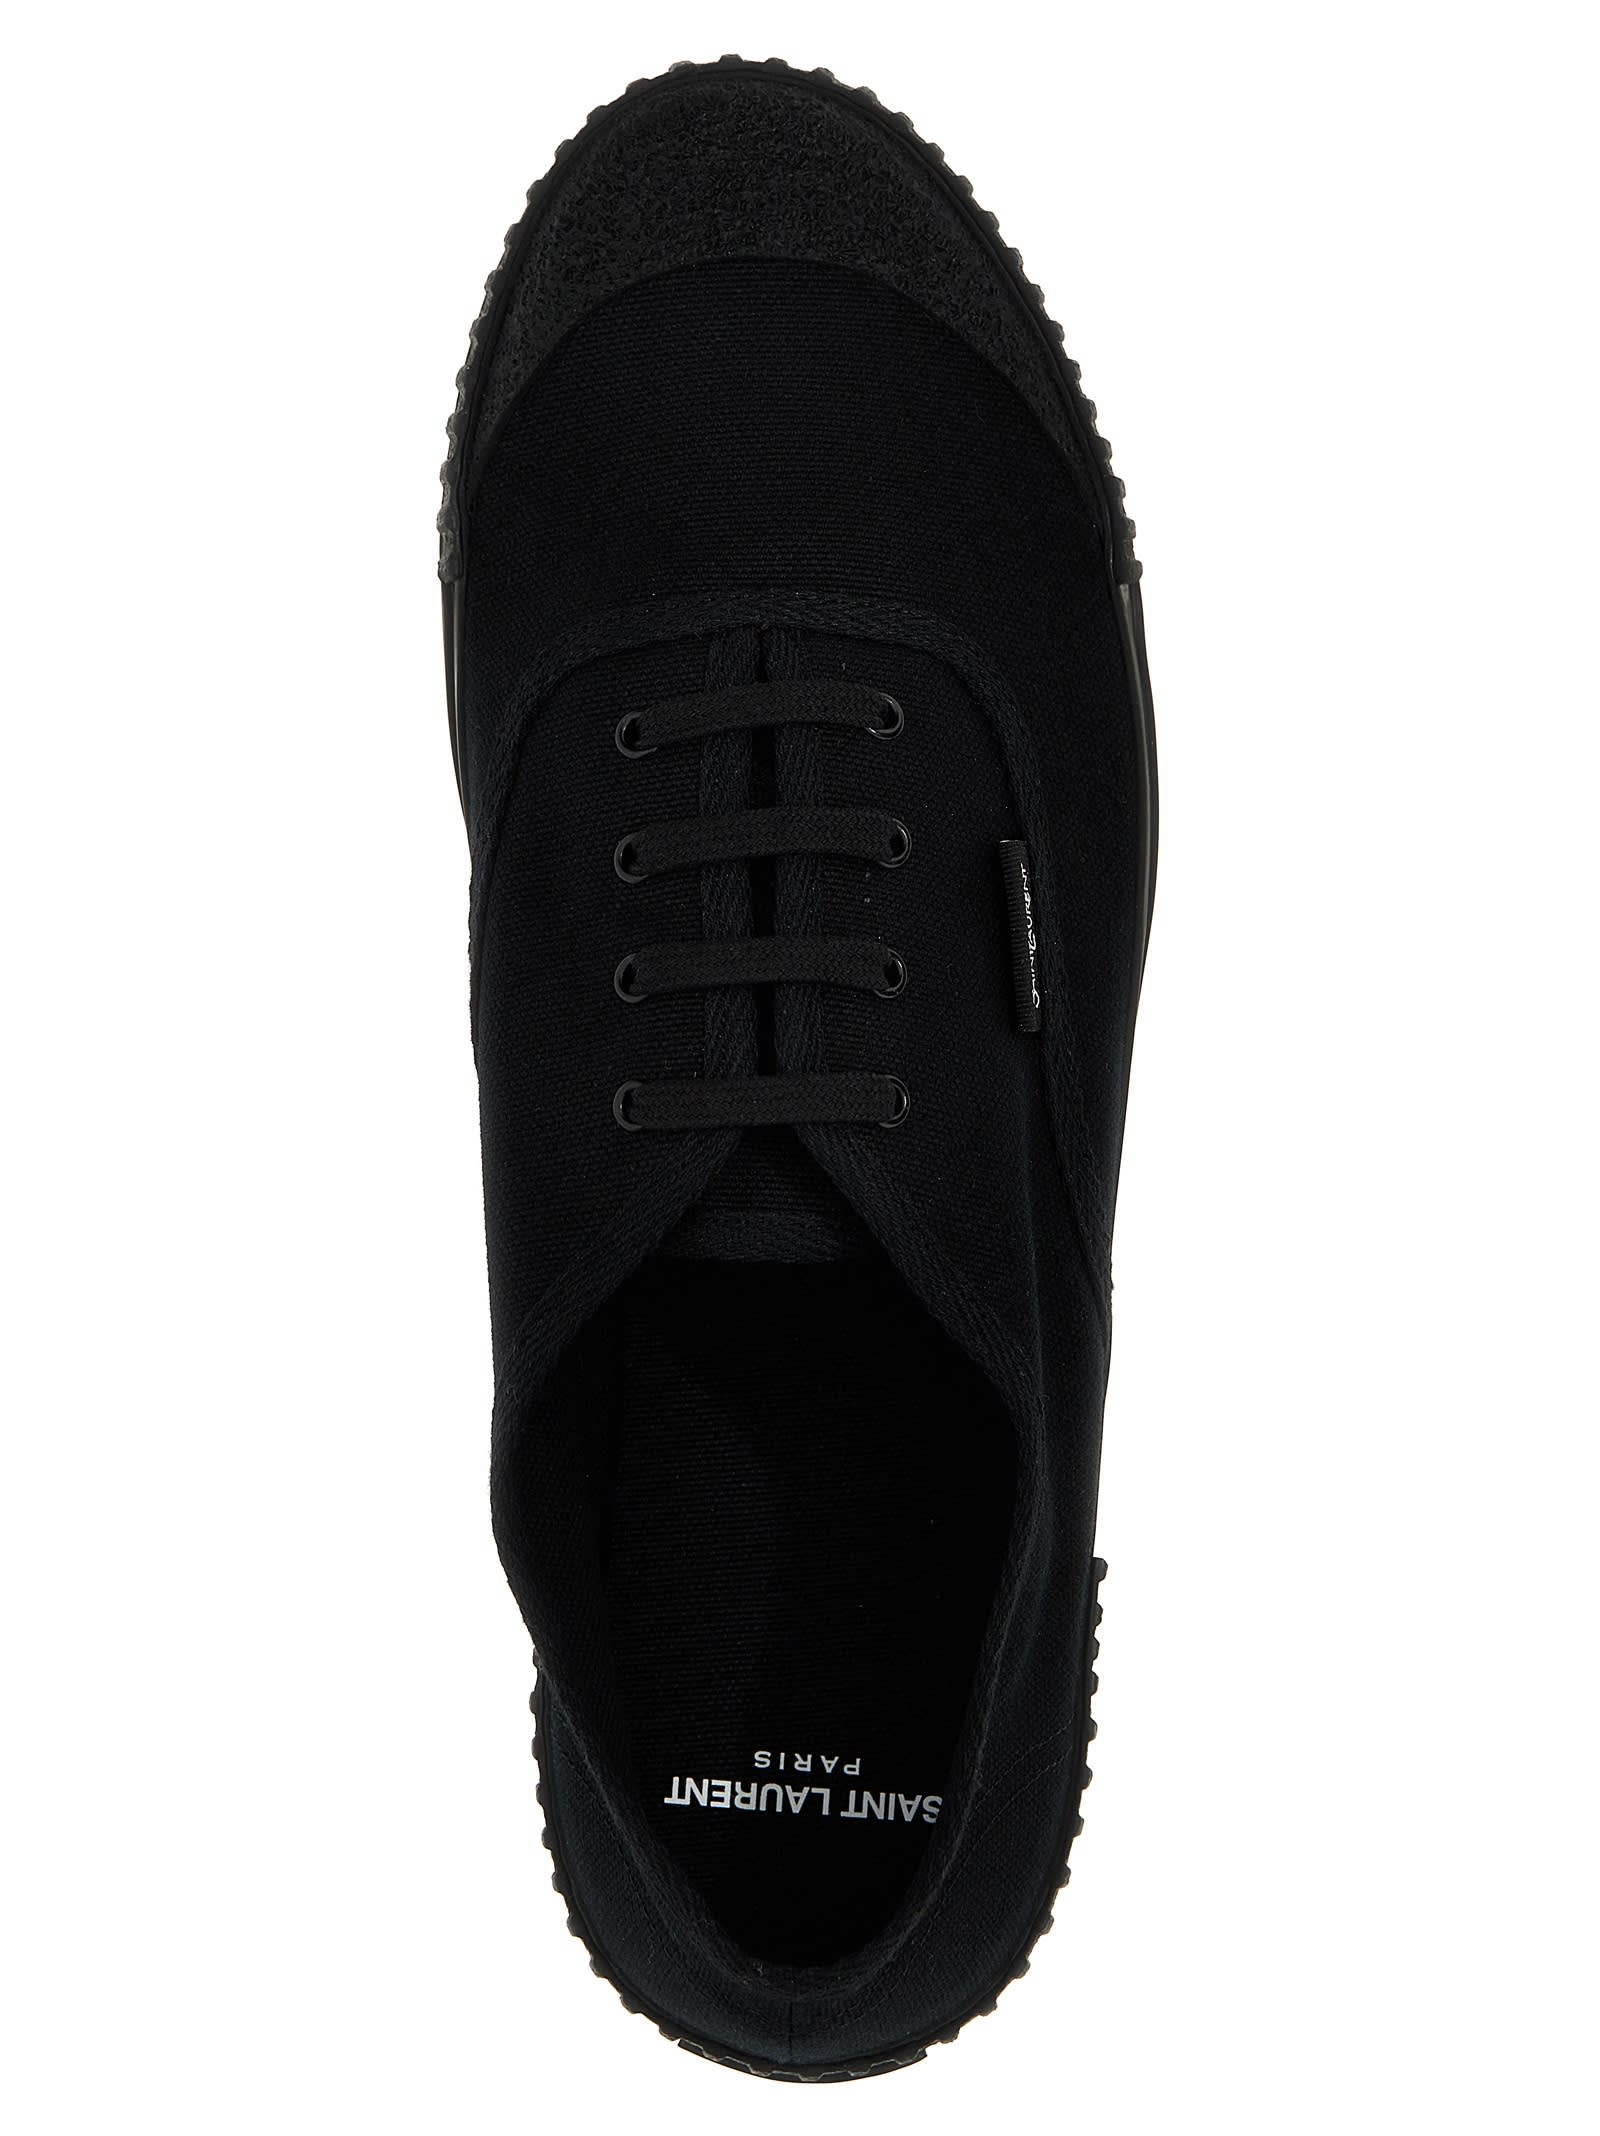 Shop Saint Laurent Wes Sneakers In Black